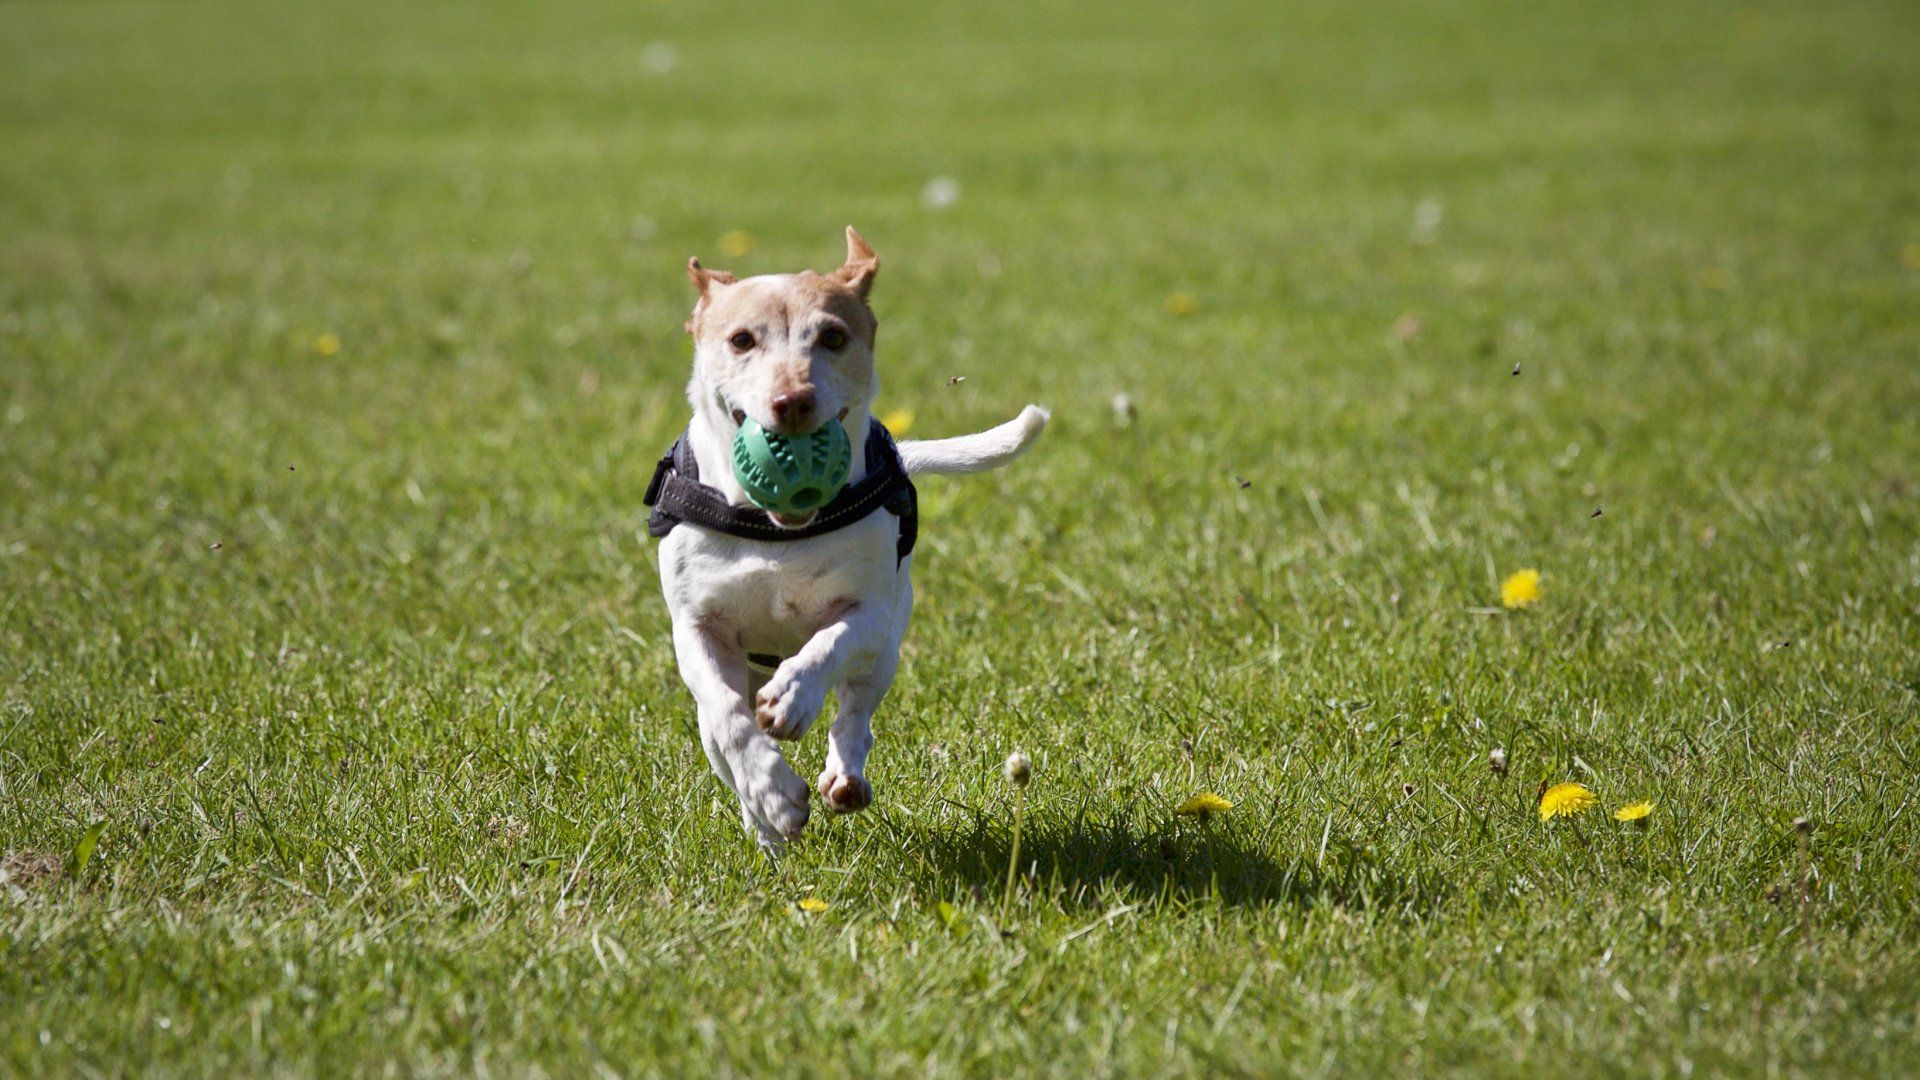 Dog running on a grassy land